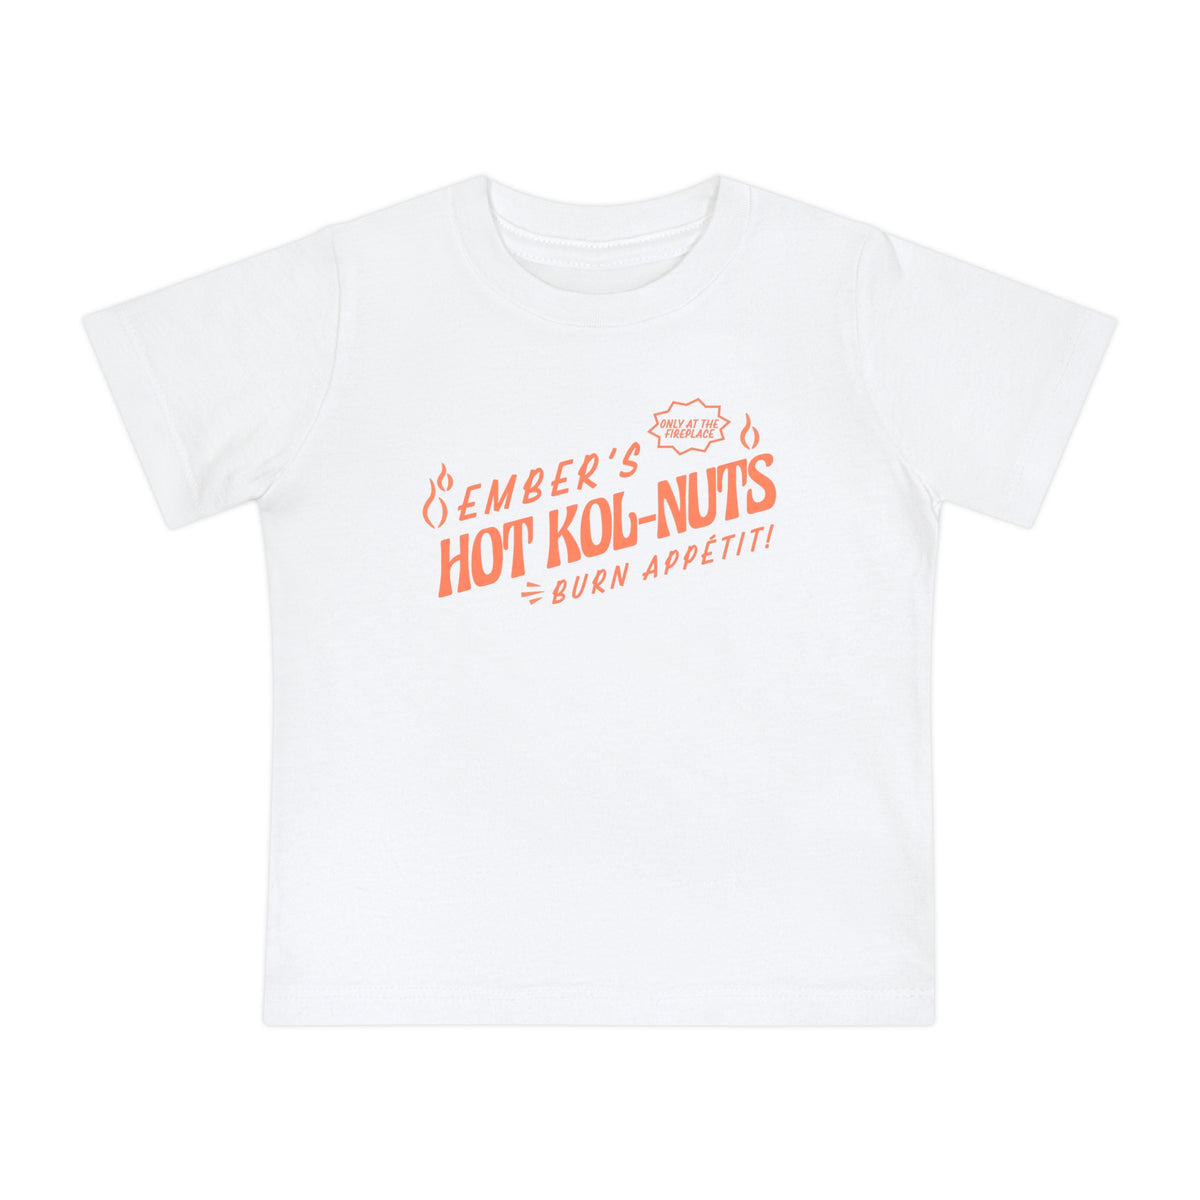 Ember's Hot Kol-Nuts Bella Canvas Baby Short Sleeve T-Shirt